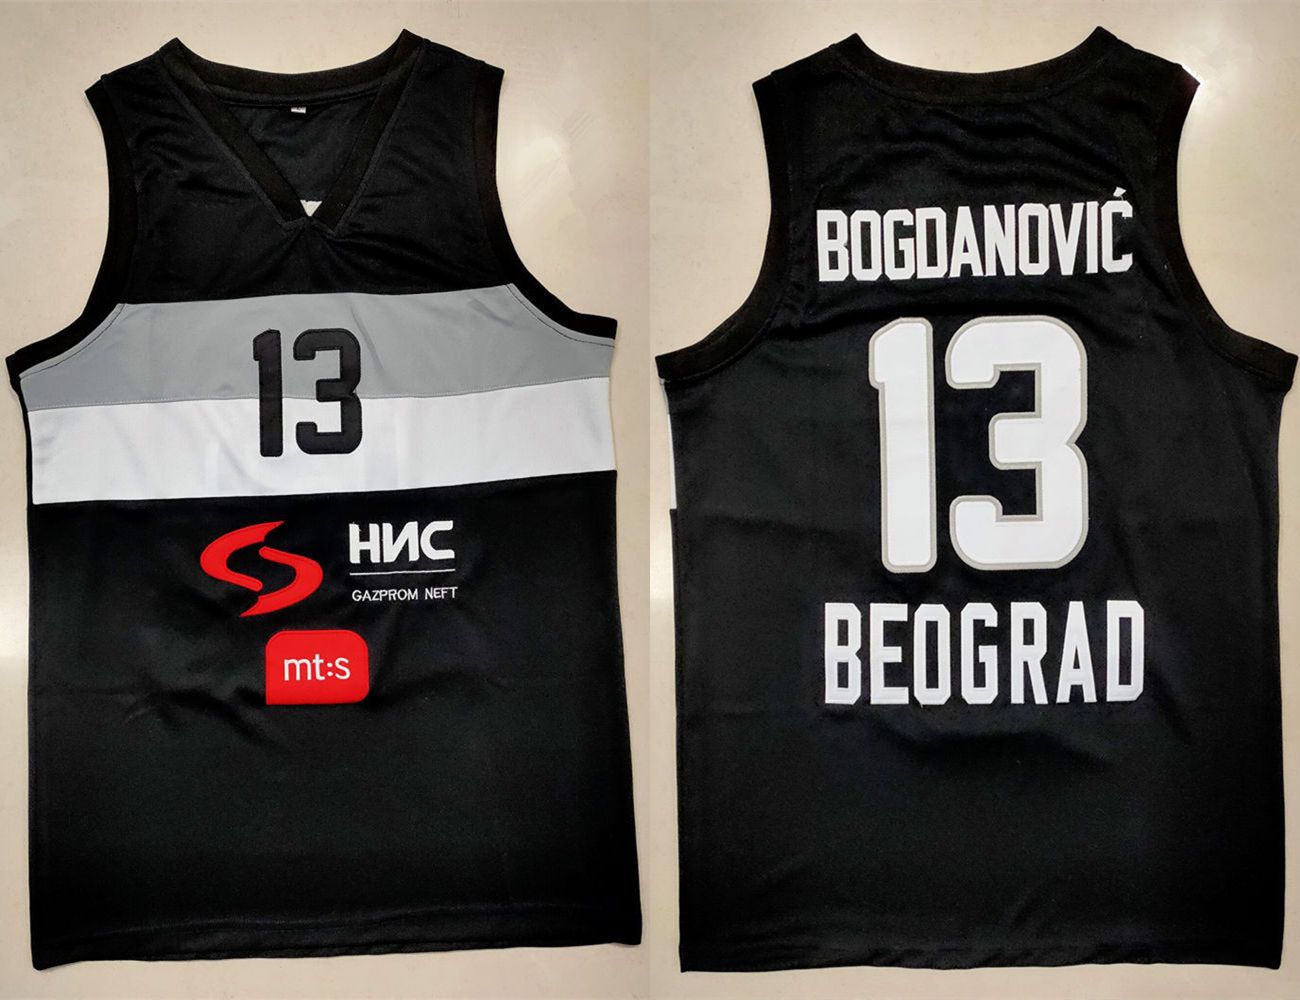 bogdanovic serbia jersey